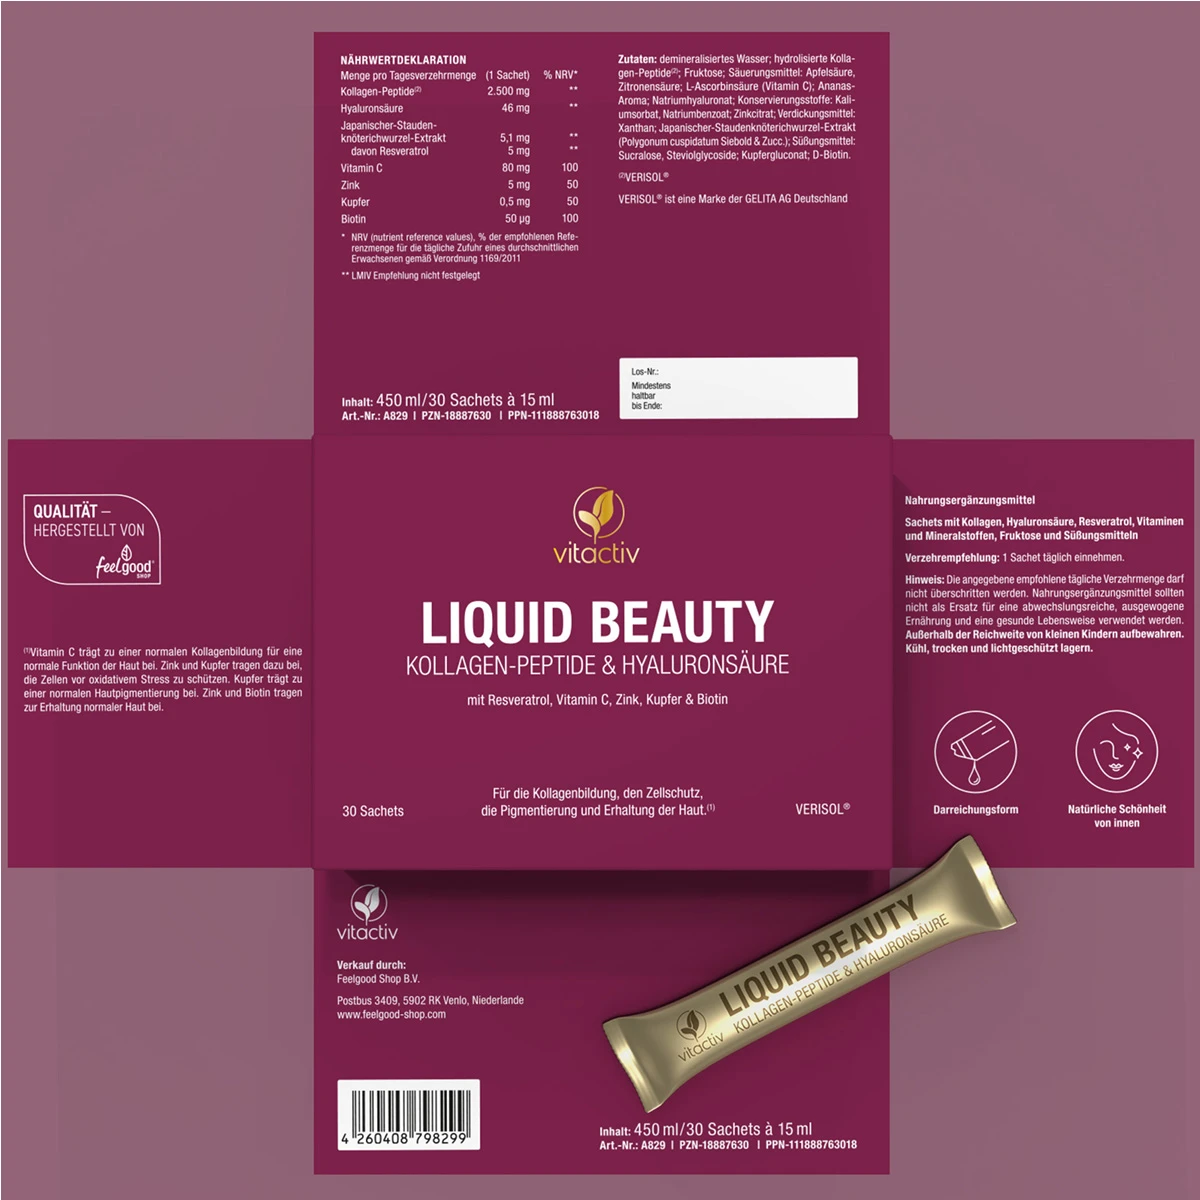 A829-Liquid-Beauty-18887630-08-1200px_1920x1920